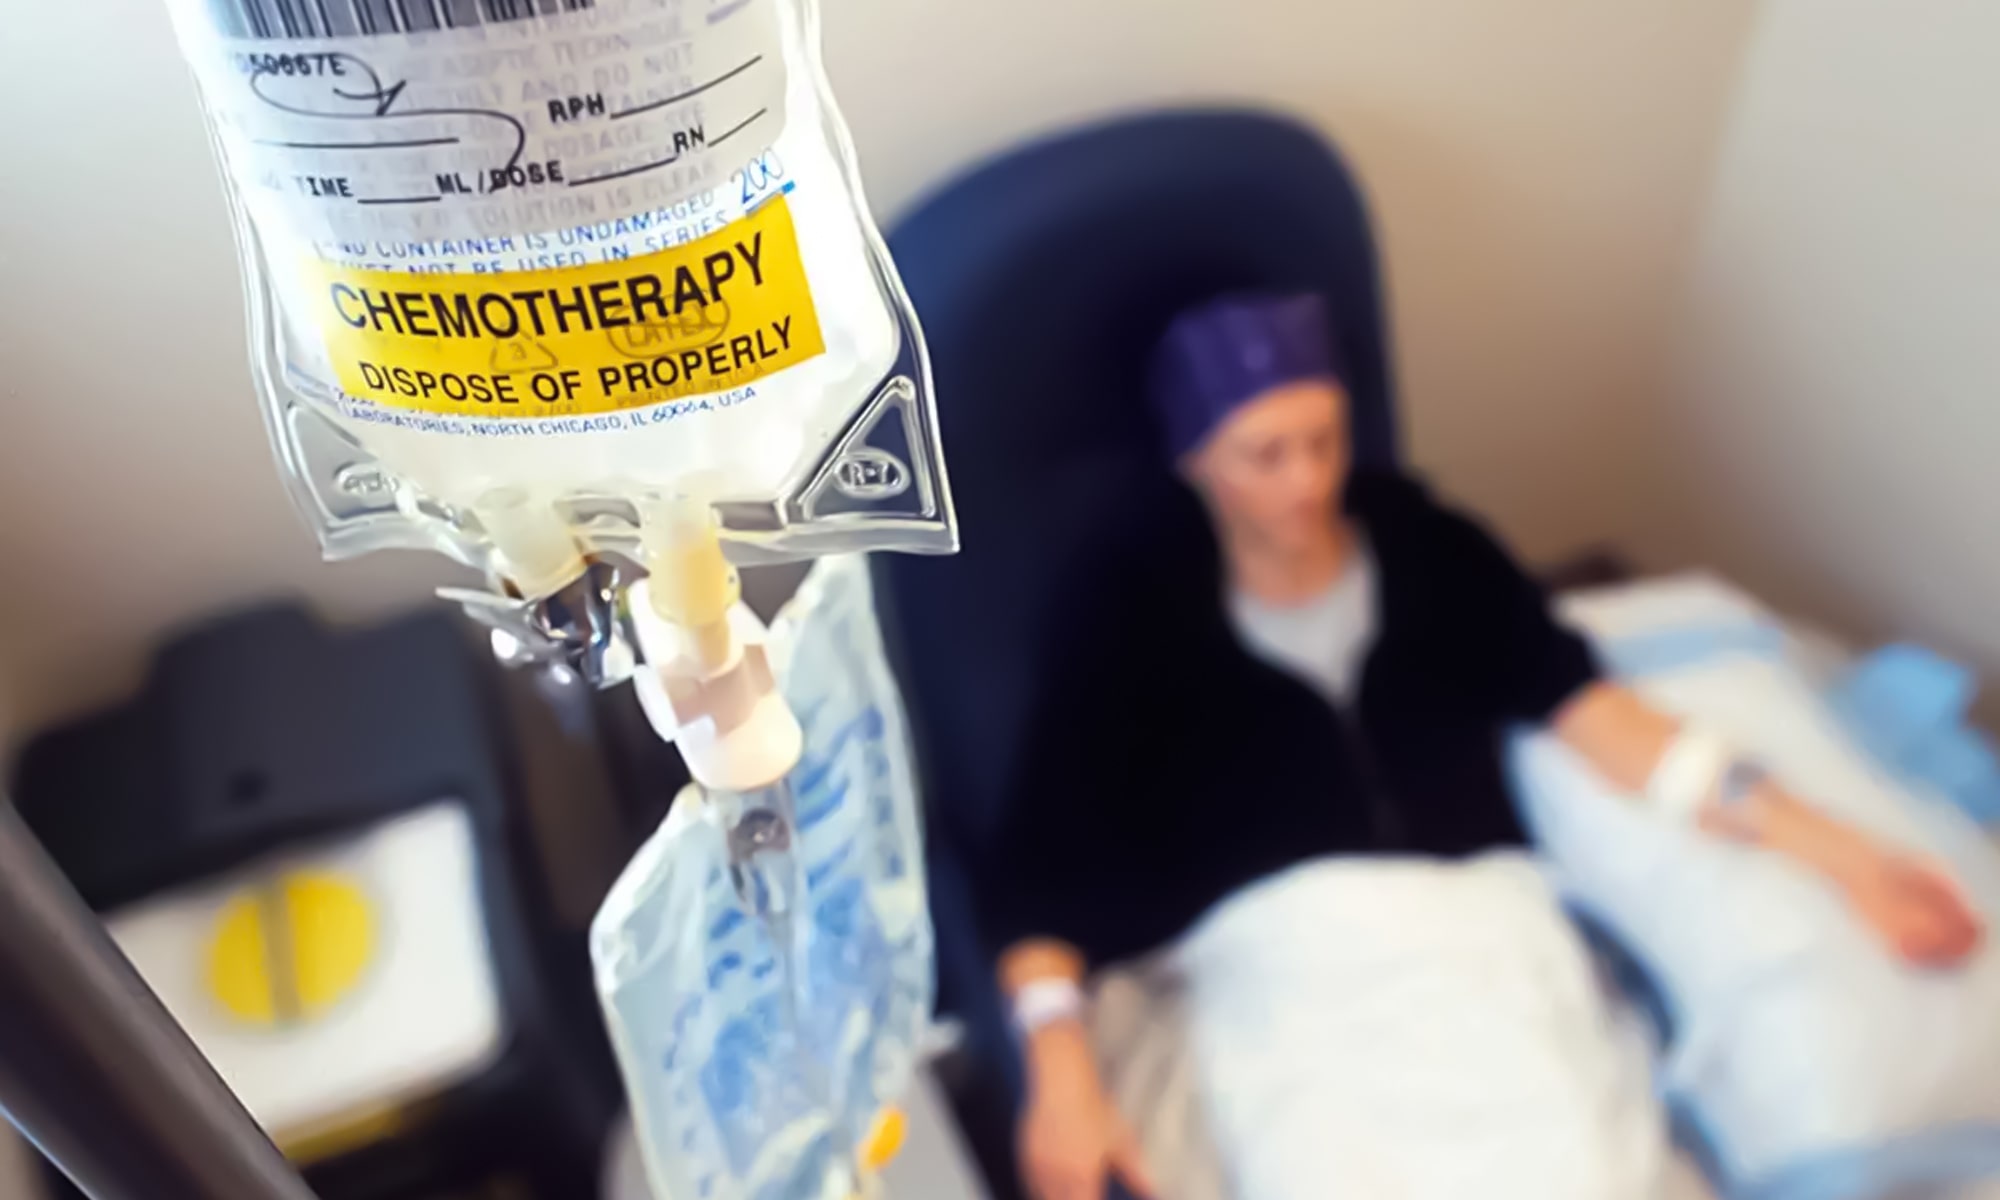 NSCRI Hospital Service - Medical oncology & chemotherapy